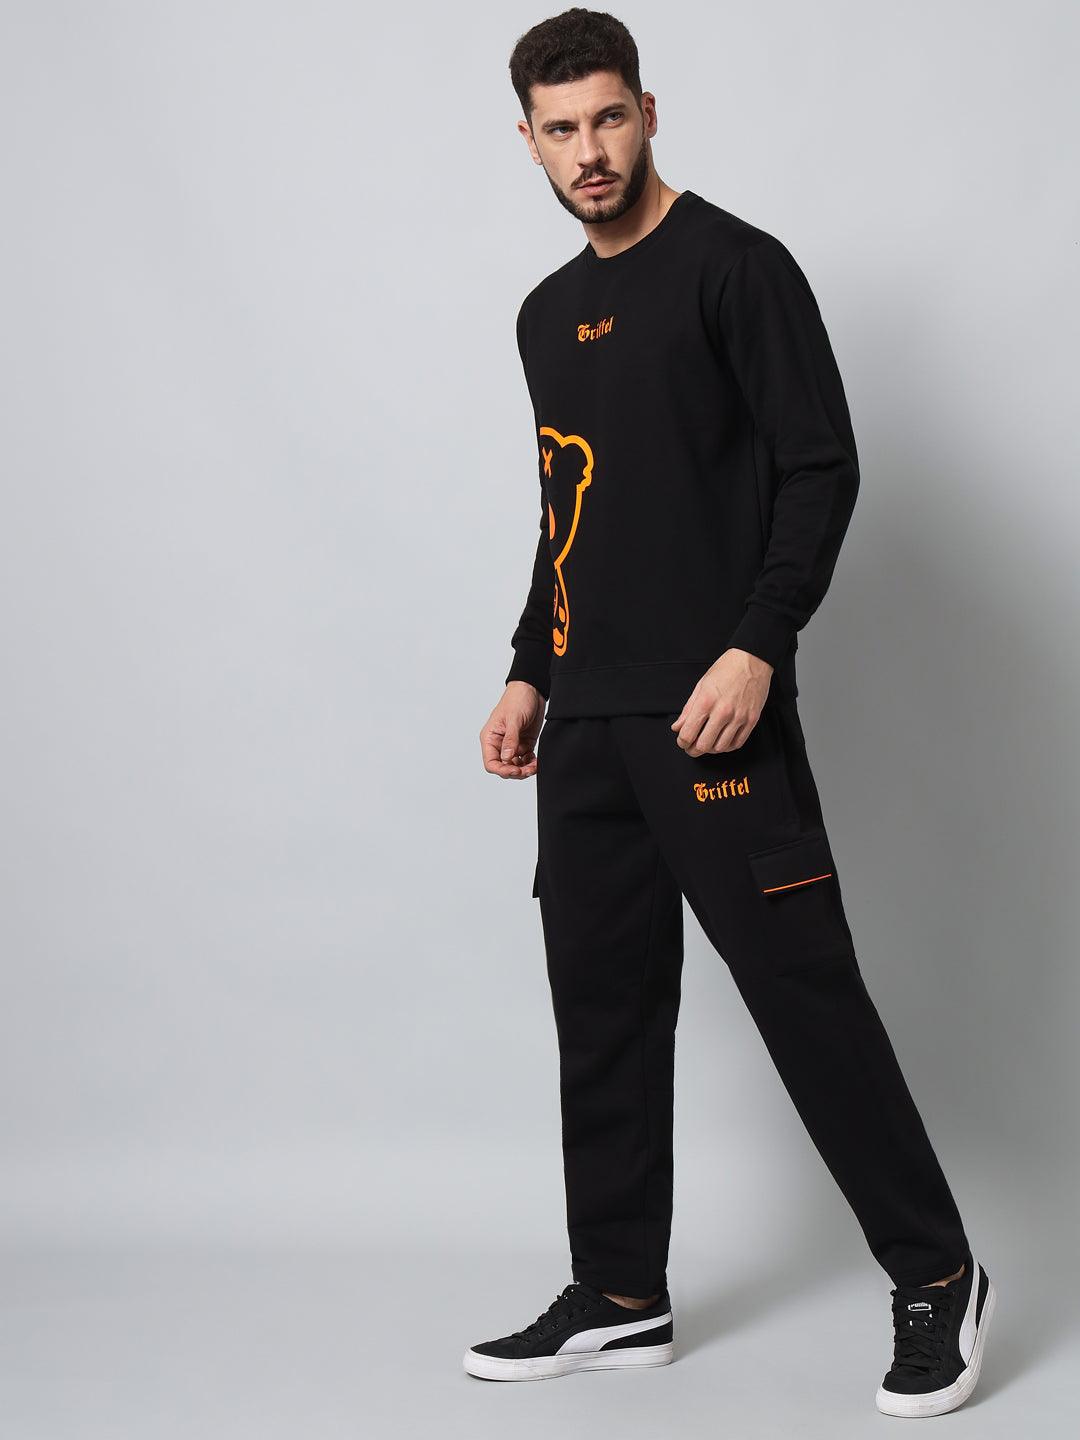 Griffel Men's Cotton Fleece Round Neck Black Orange Sweatshirt with Full Sleeve and Teddy Logo Print - griffel